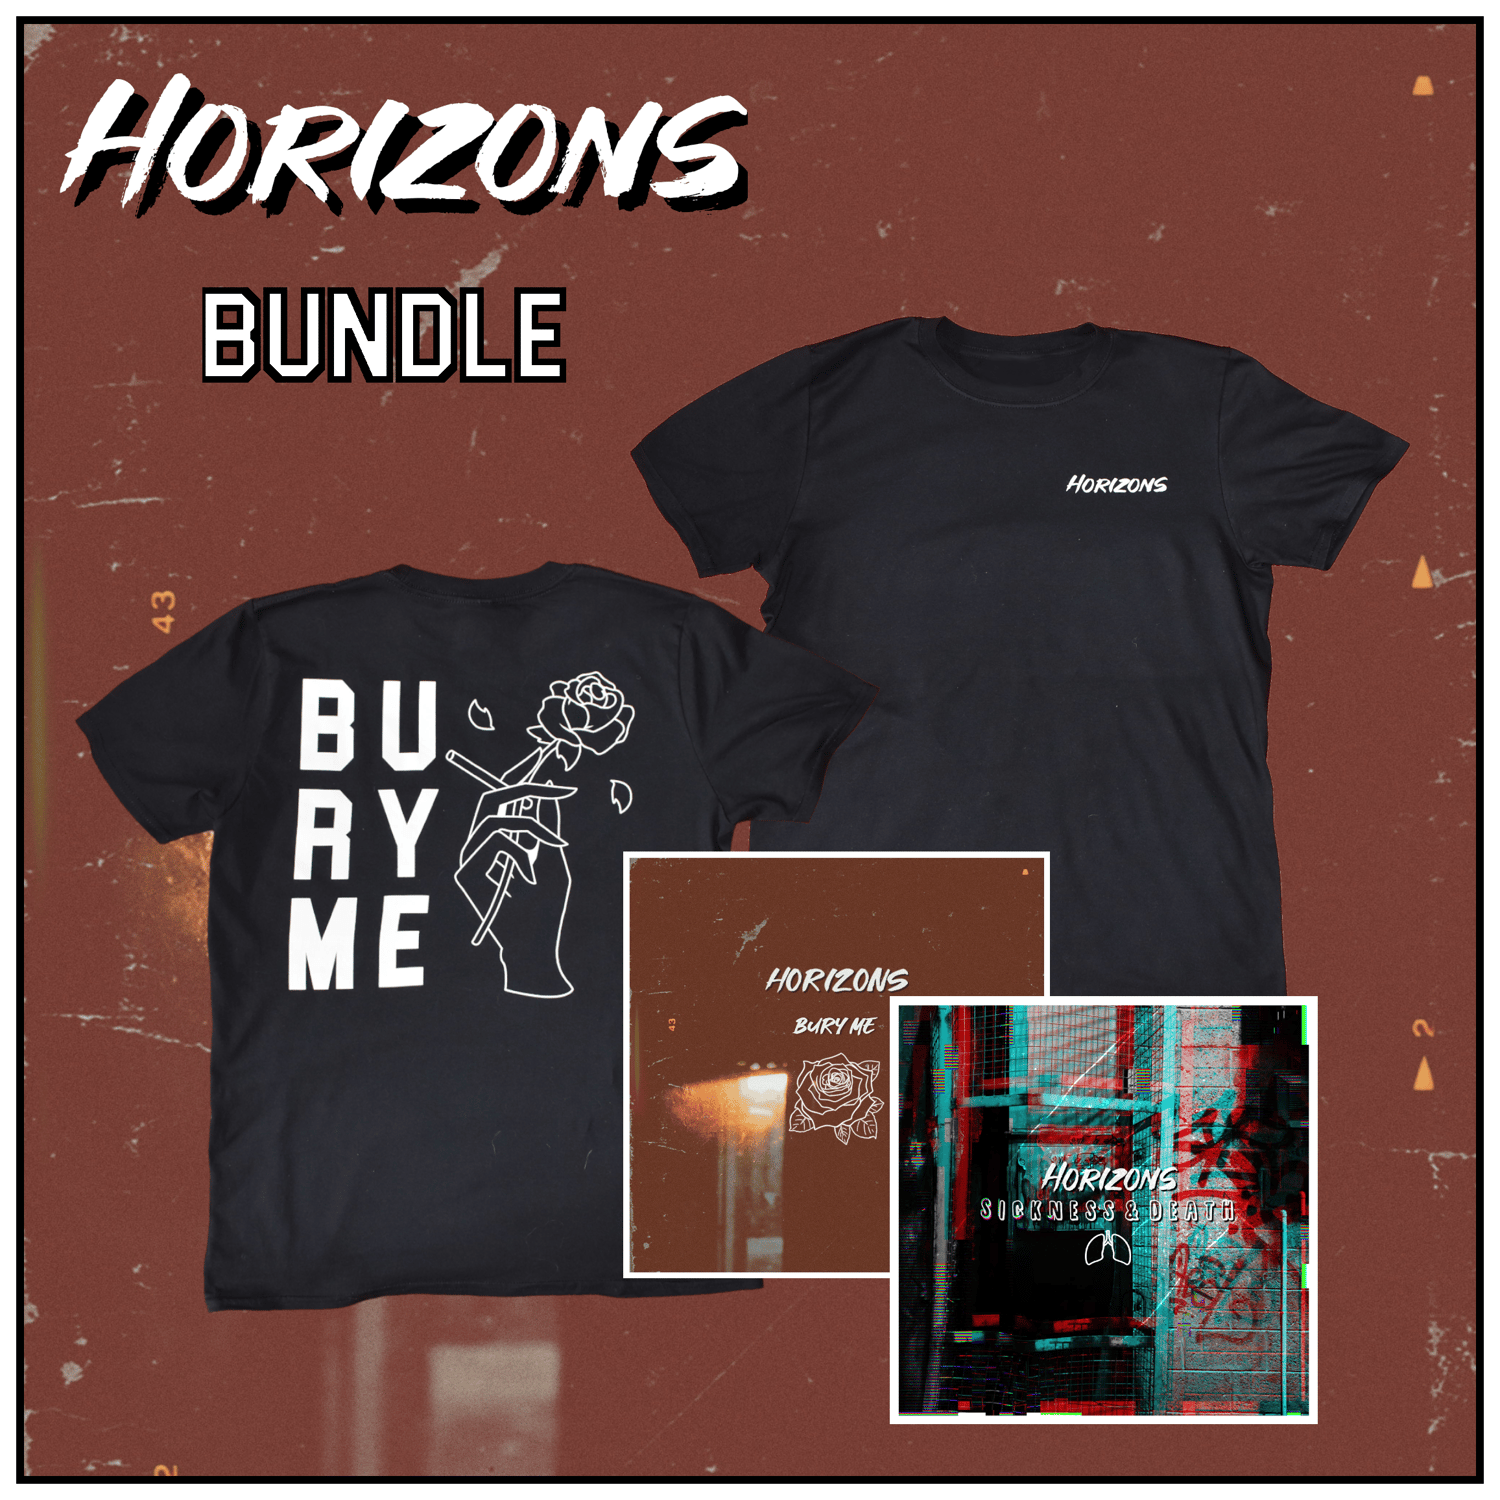 Bury Me - T-Shirt Bundle